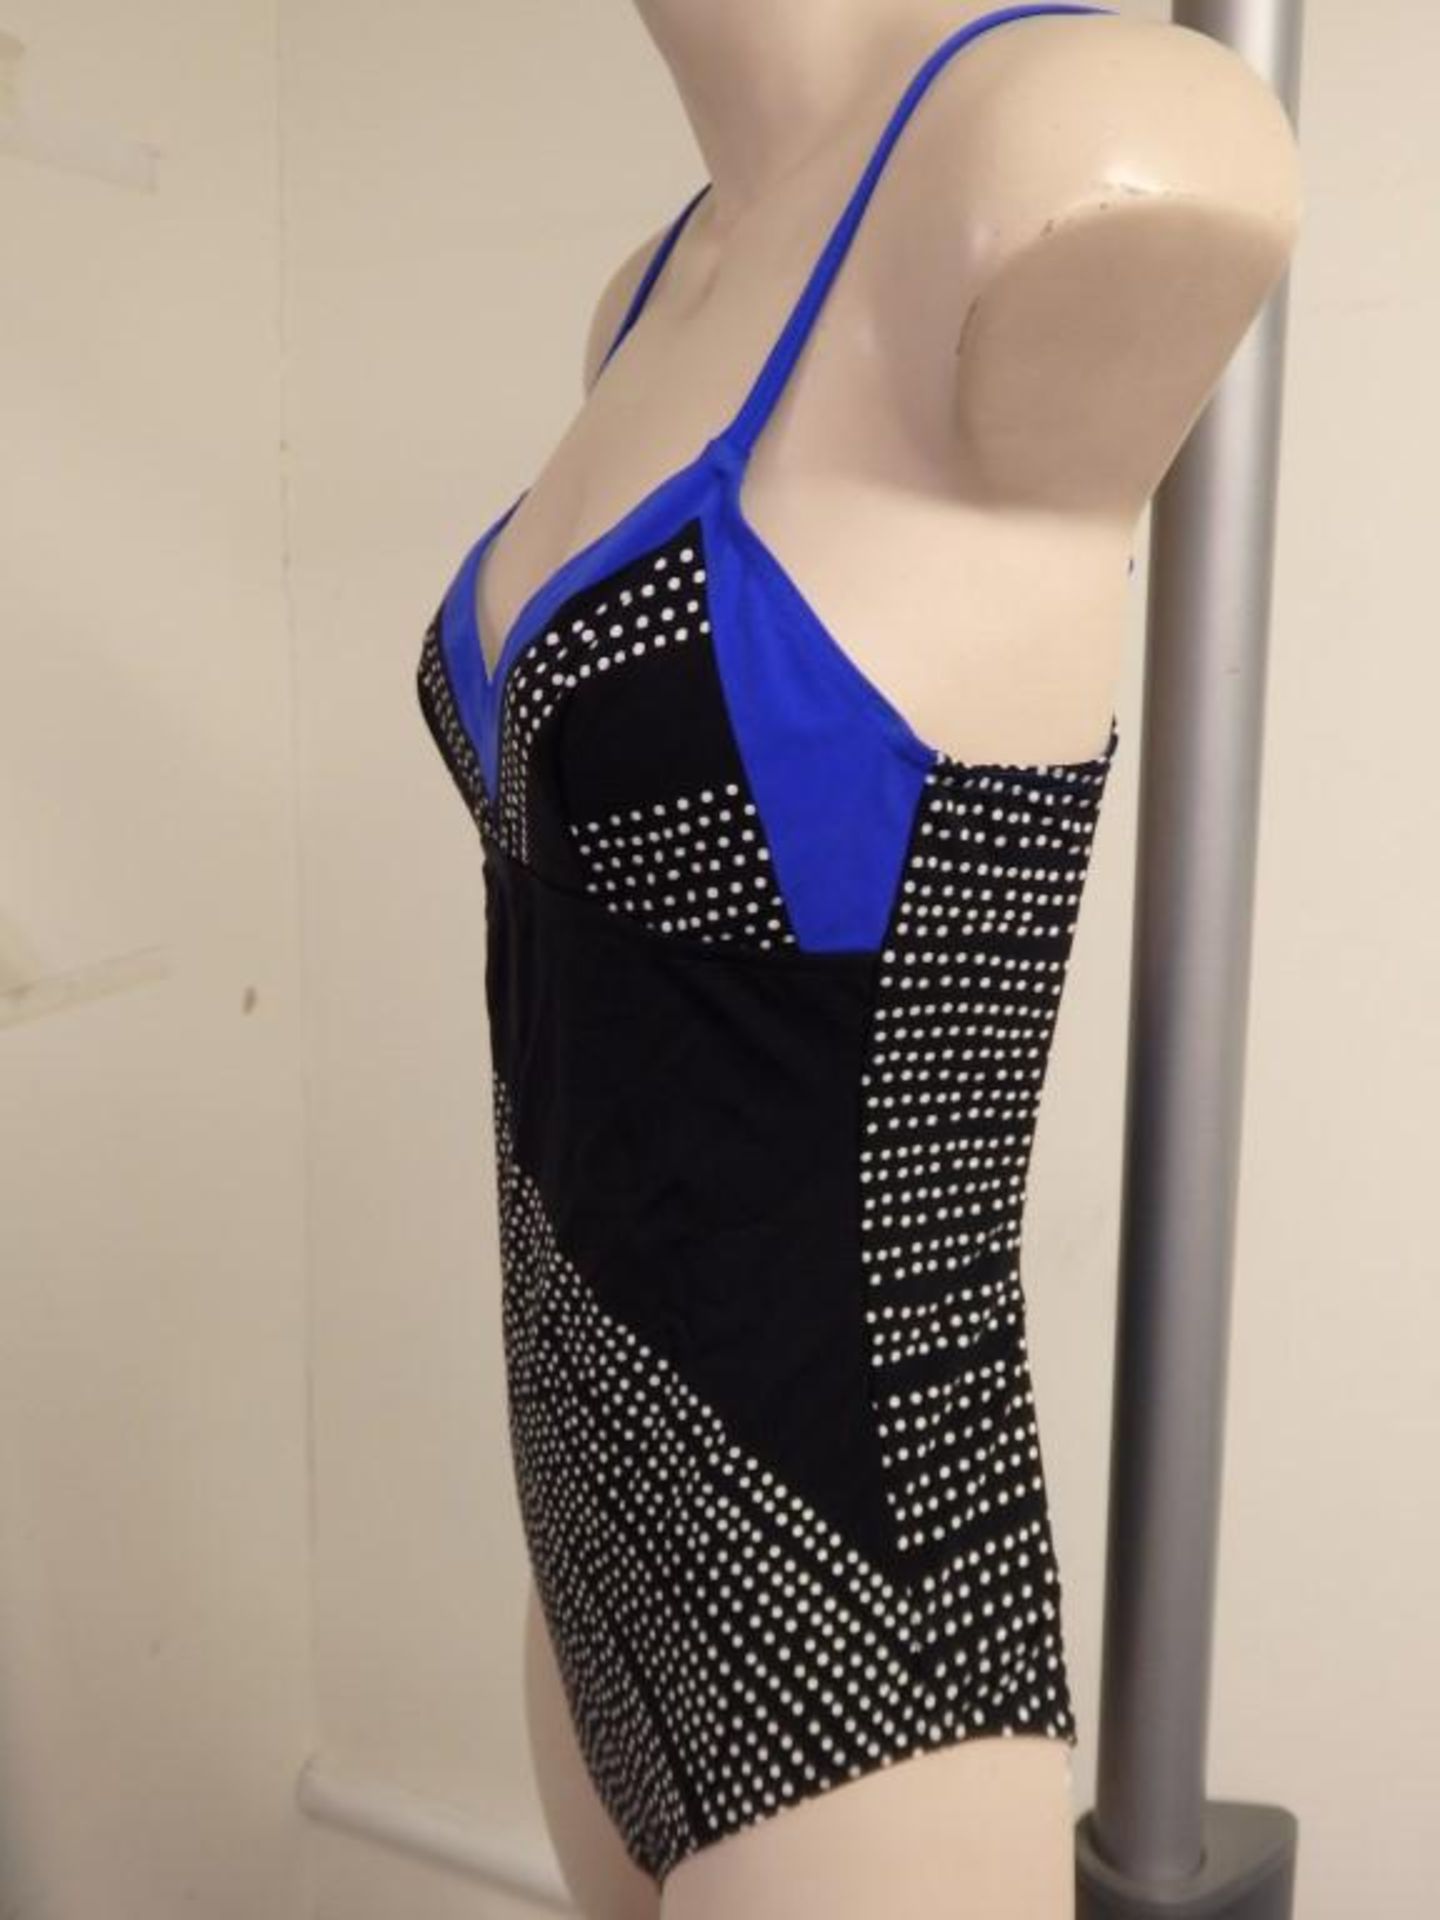 1 x Rasurel - Black Polka dot with royal blue trim & frill Tobago Swimsuit - B21039 - Size 2C - UK 3 - Image 3 of 8